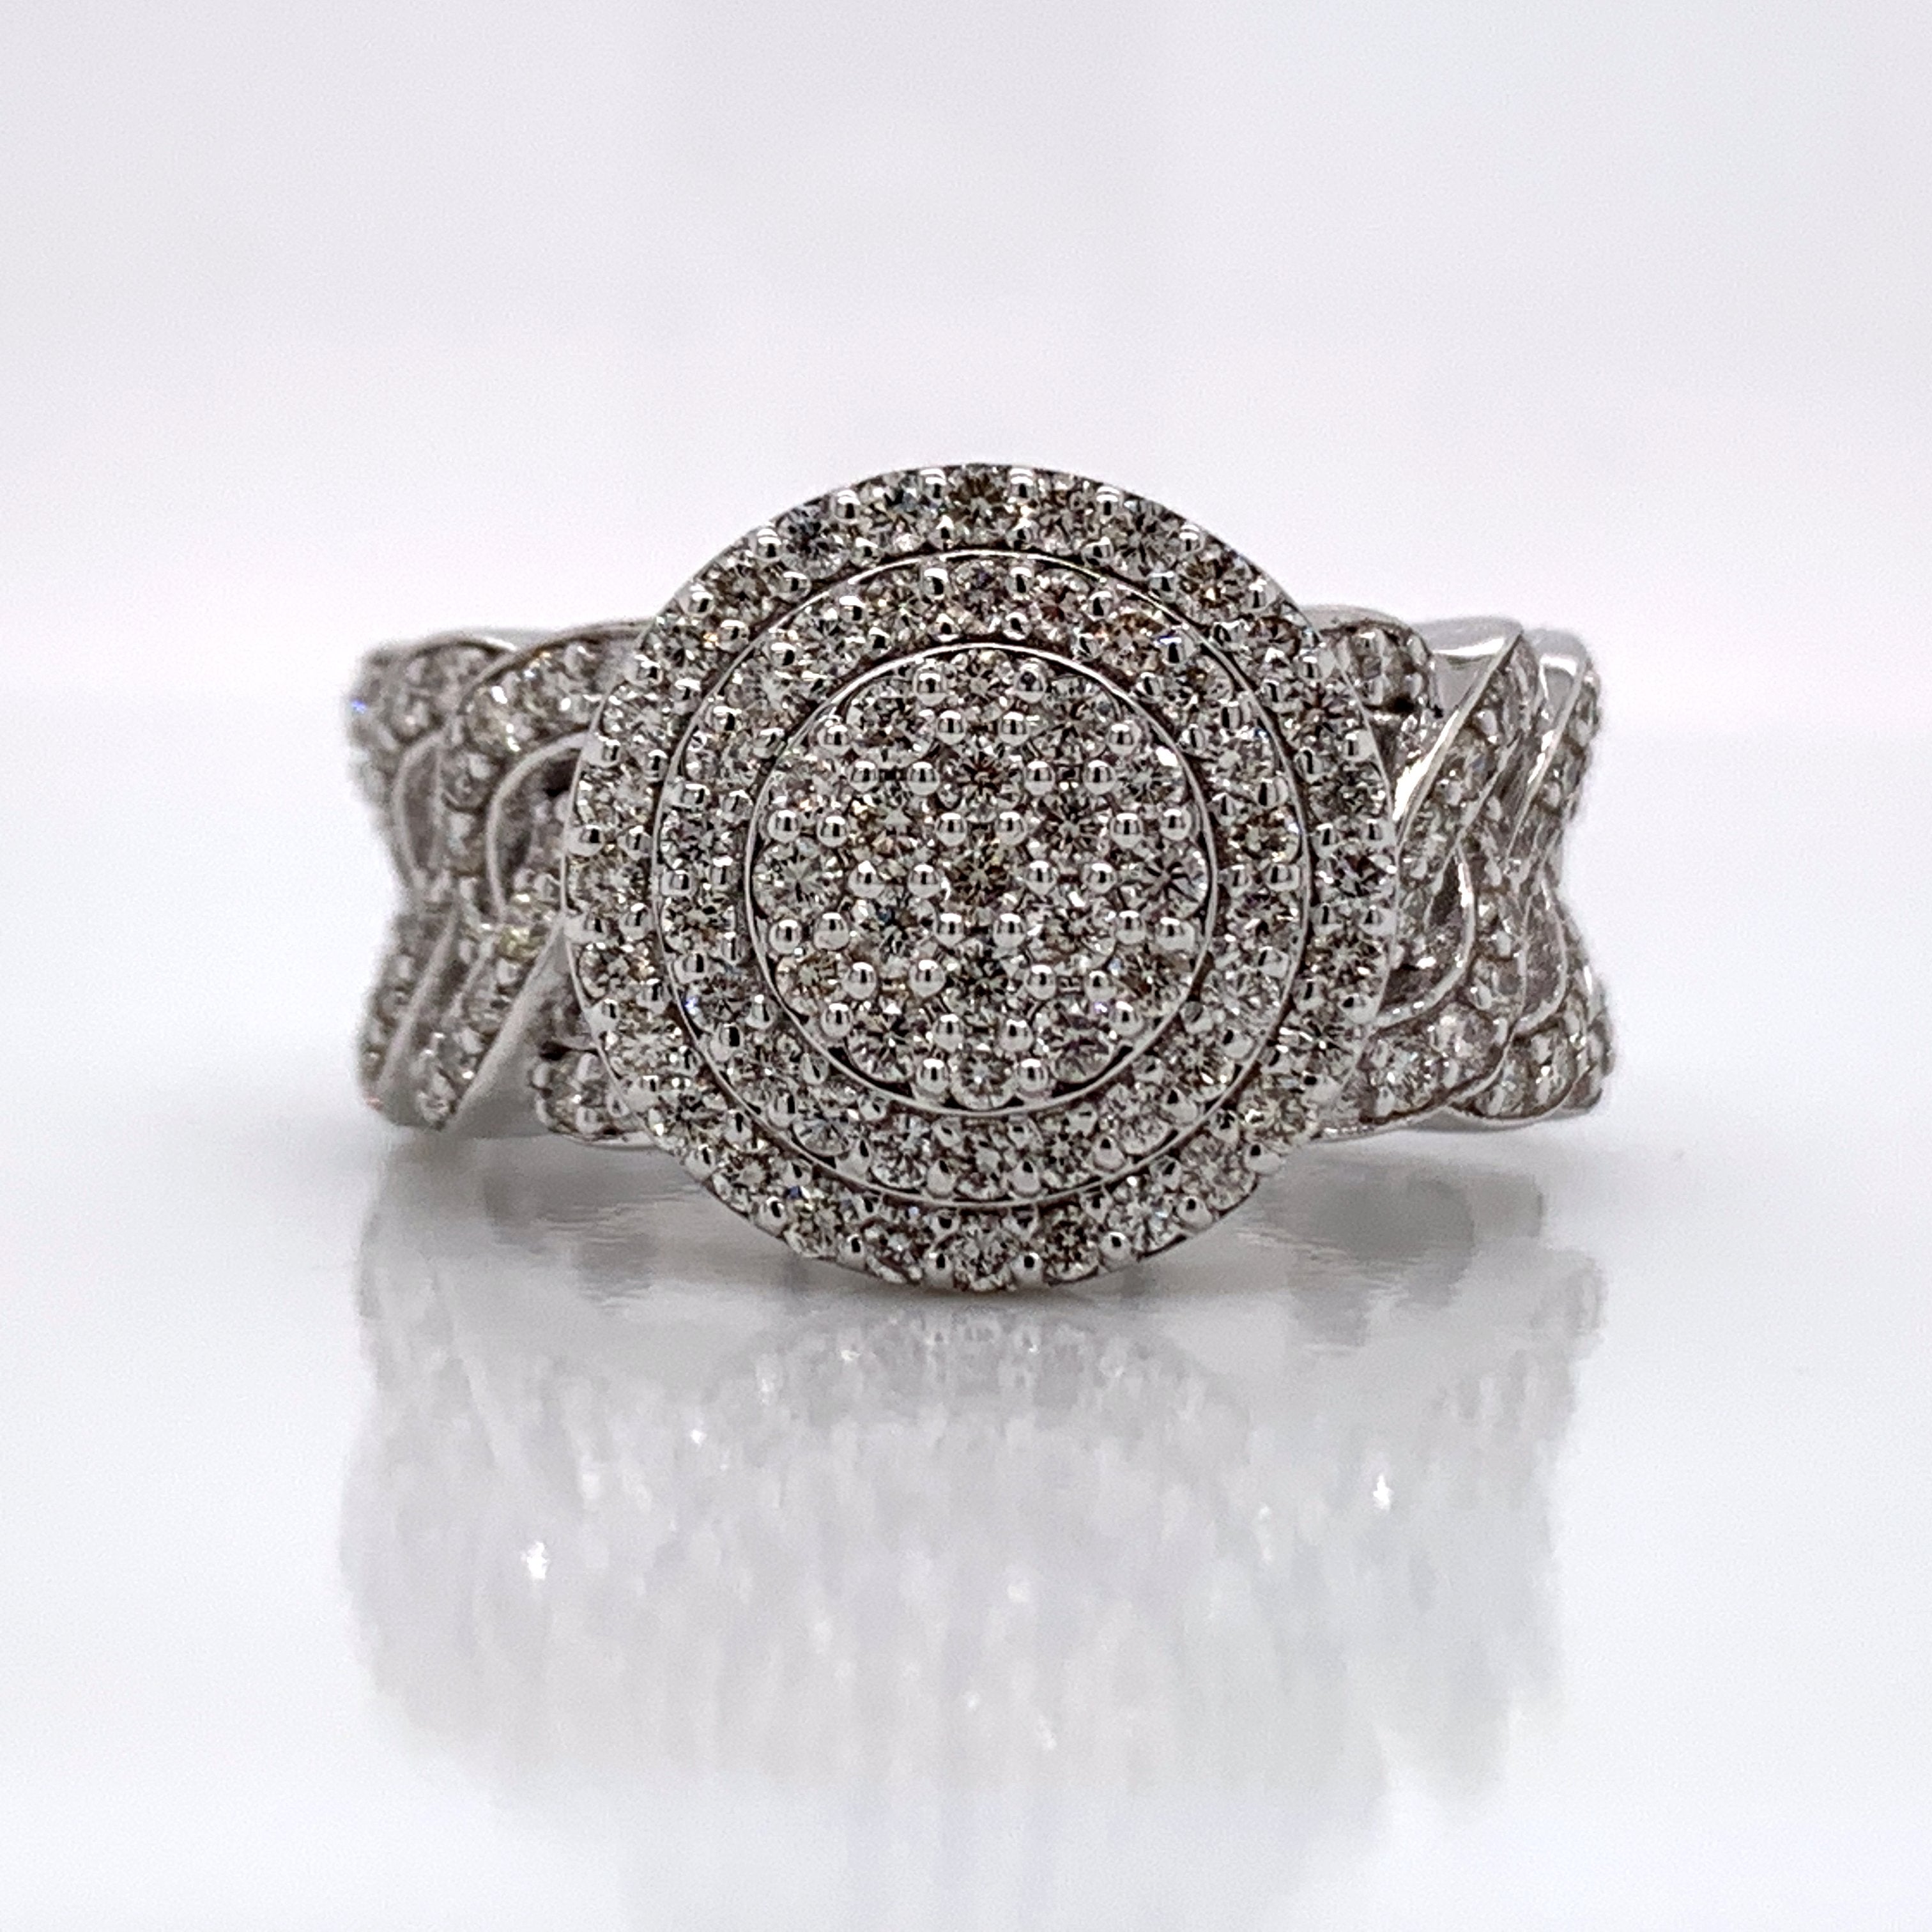 1.62CT Diamond Ring in 14K Gold - White Carat Diamonds 